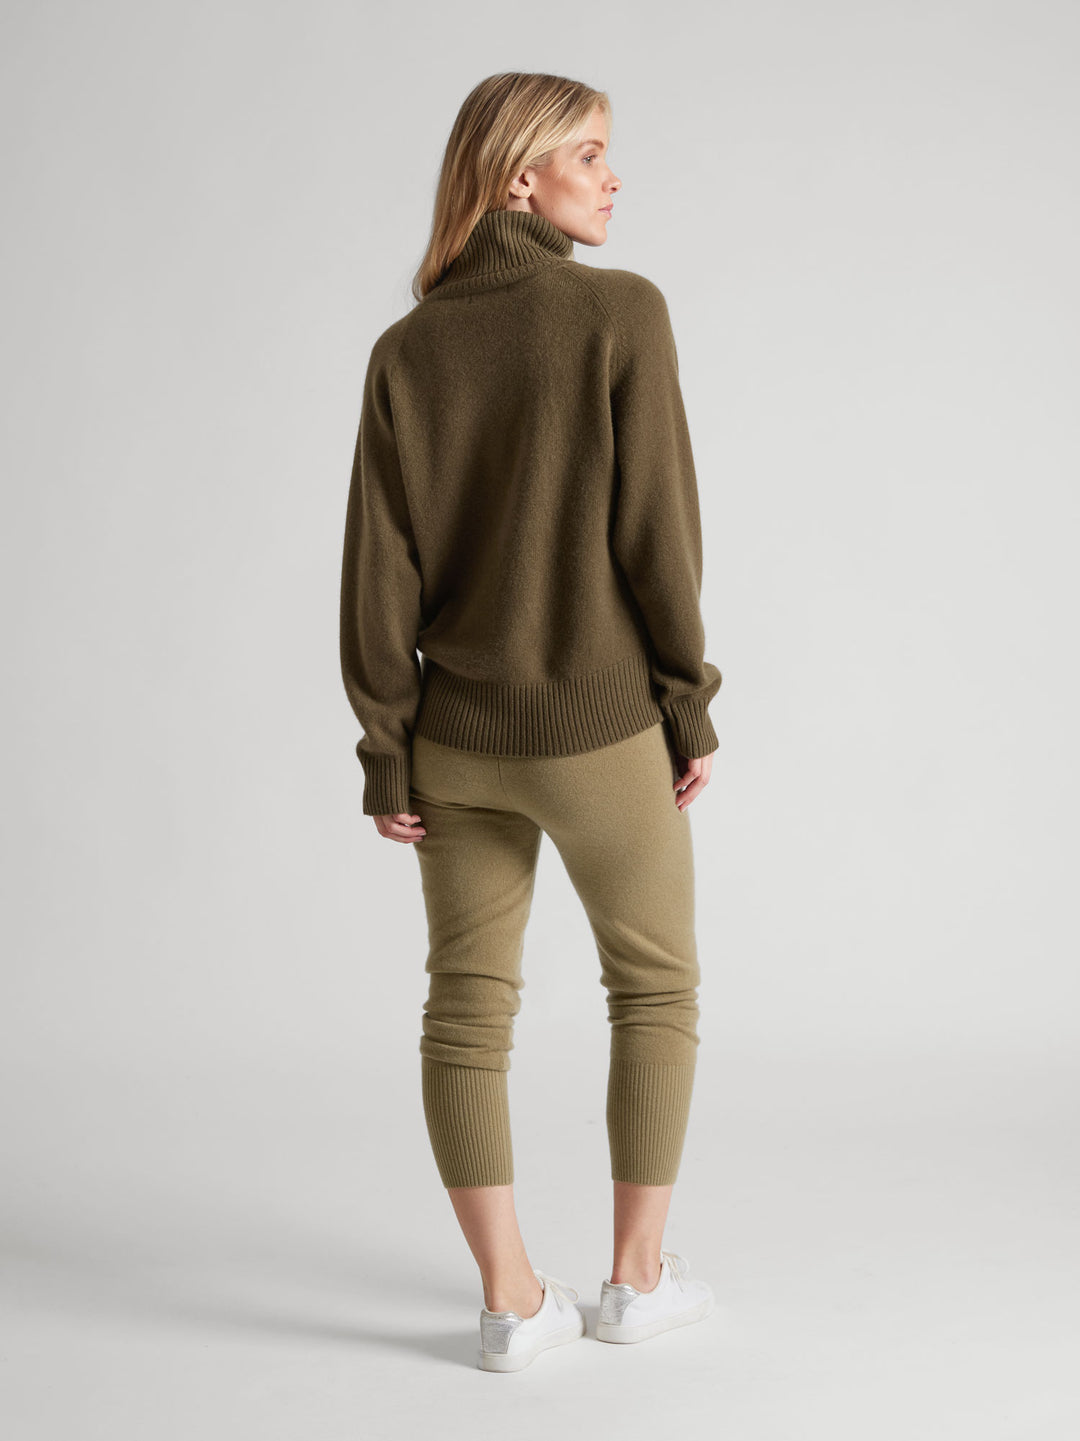 Turtle neck cashmere sweater "Milano" in 100% pure cashmere. Scandinavian design by Kashmina. Color: Hunter.